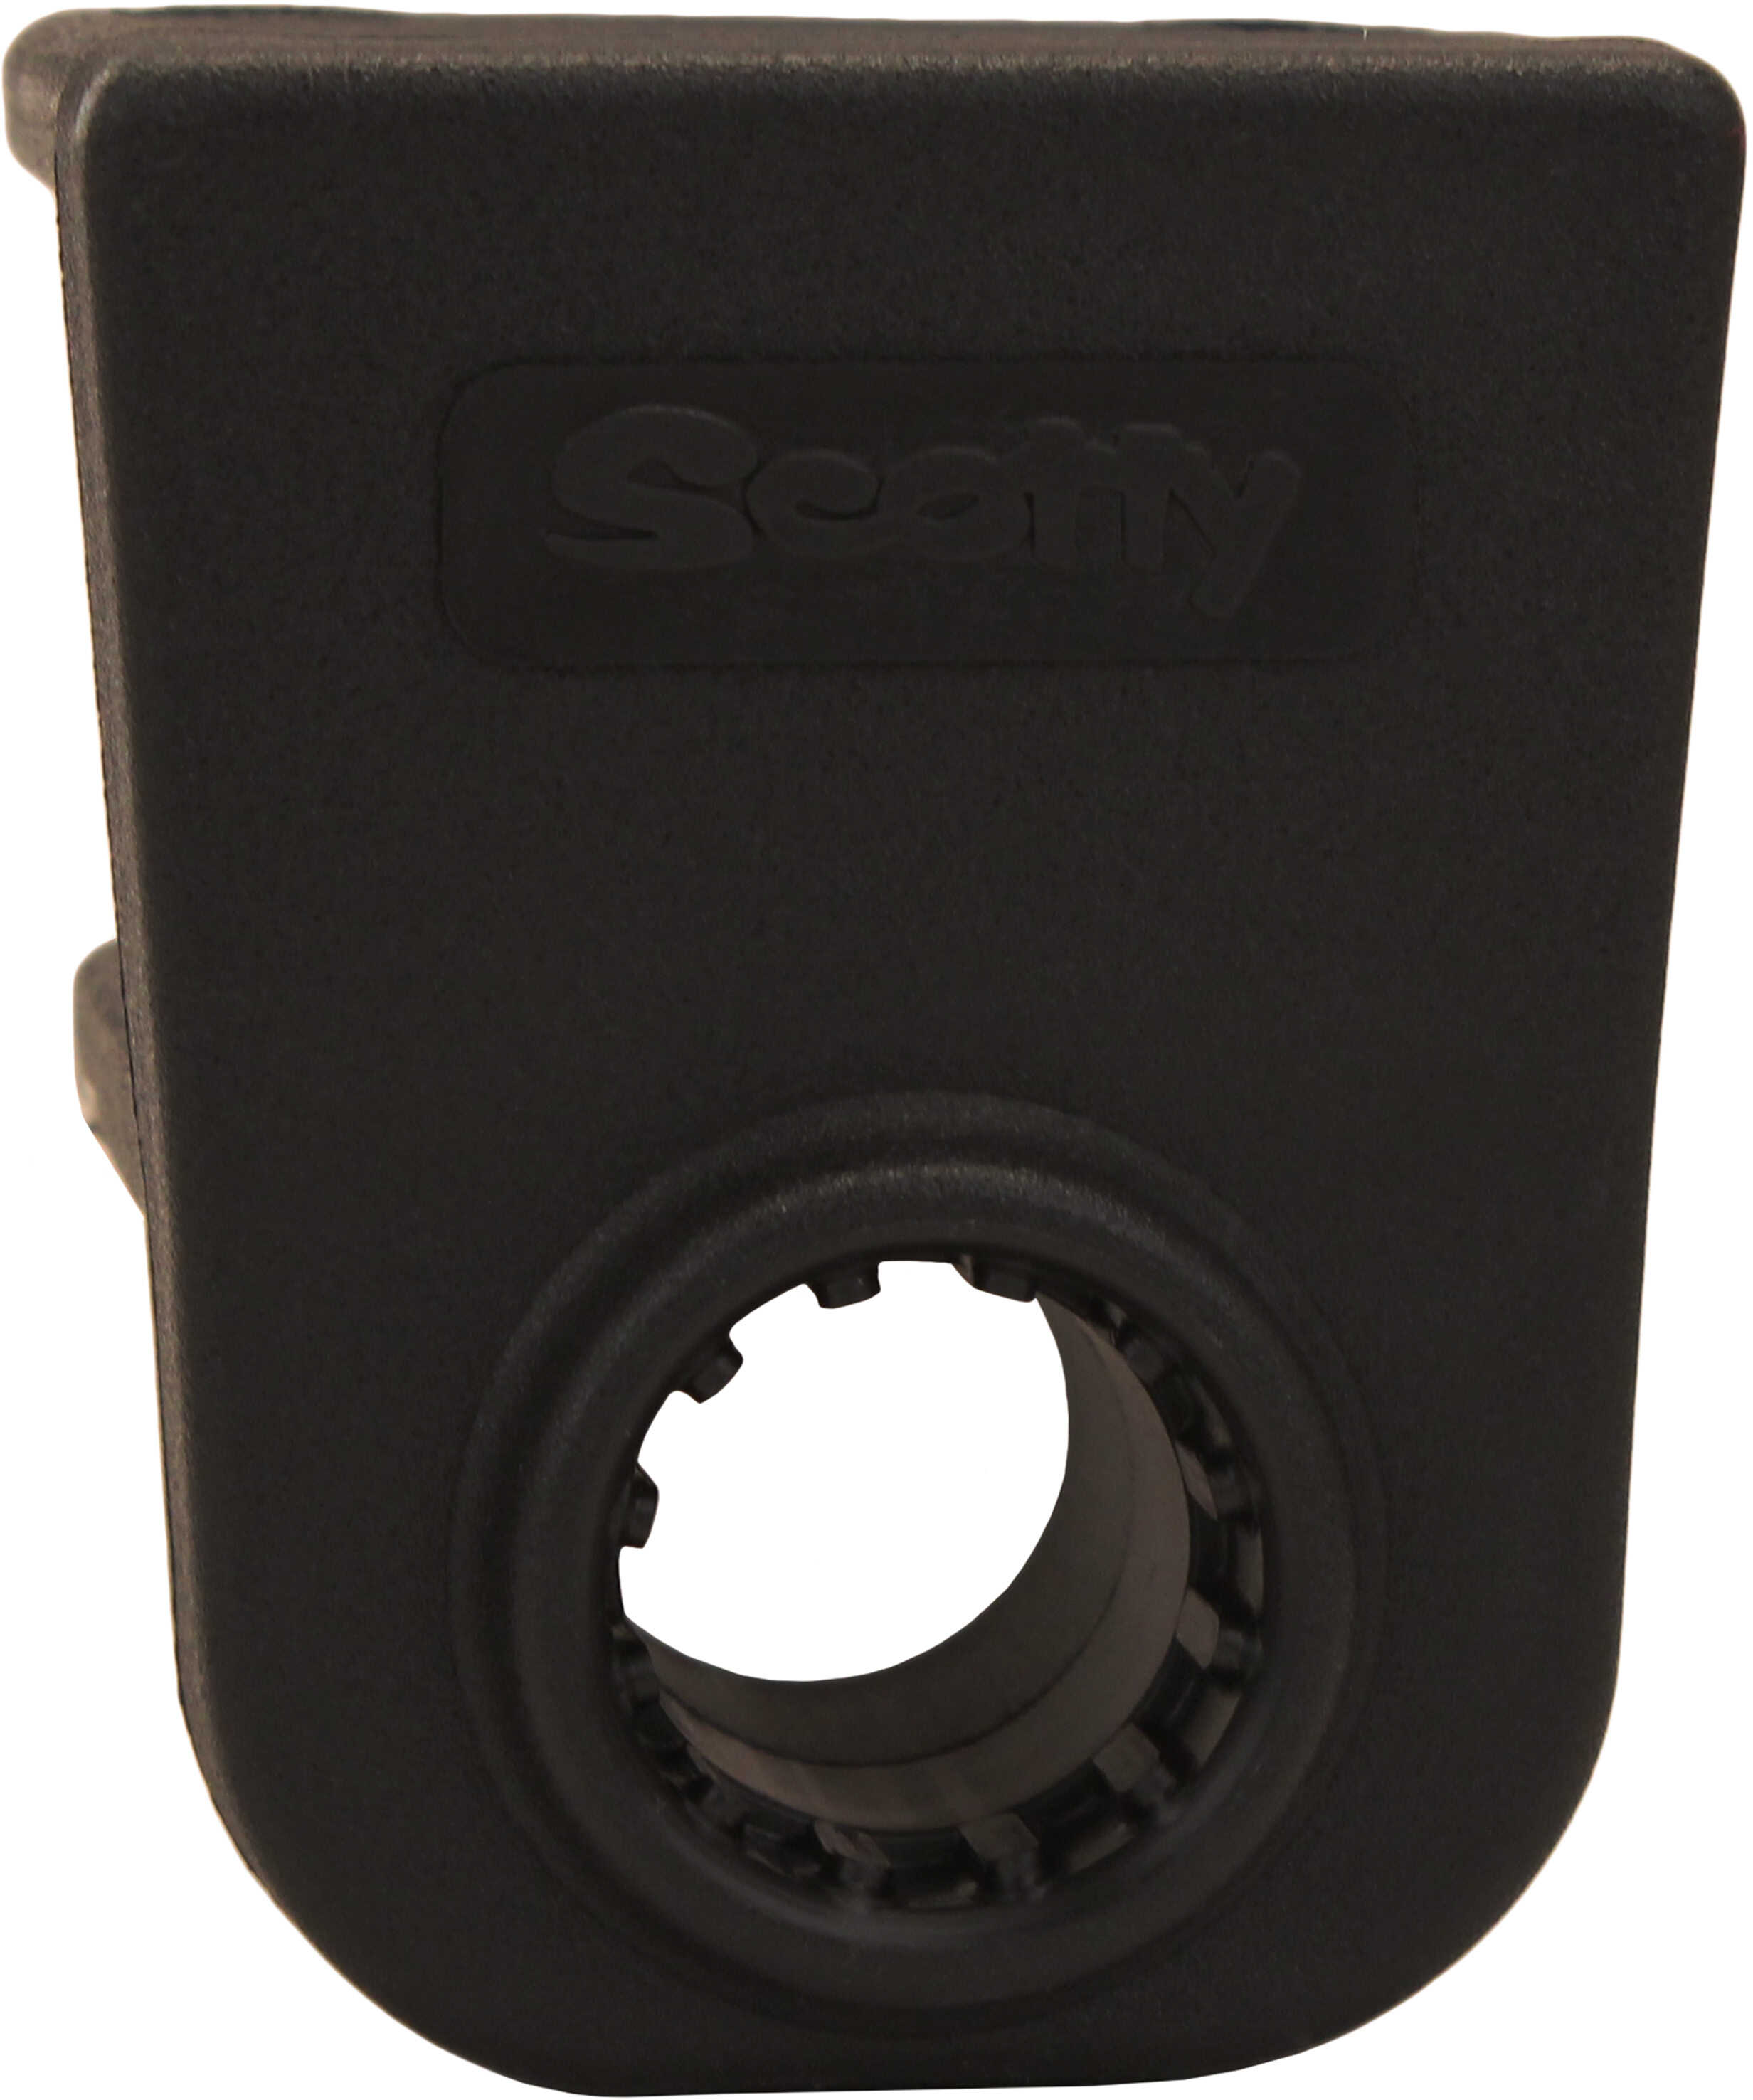 Scotty Rail Mounting Adapter 1 1/4" Square Black Md: 0243-BK